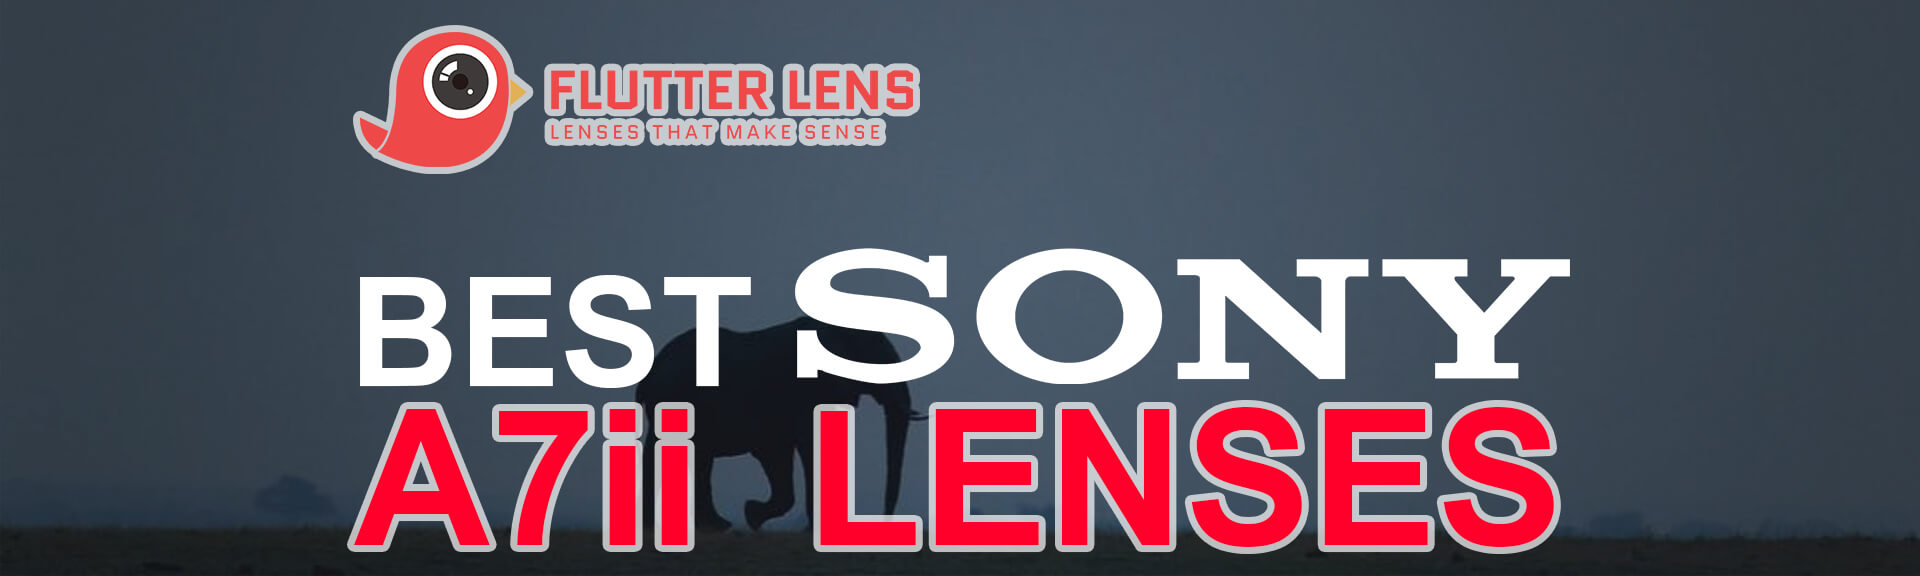 Best Sony A7ii Lenses